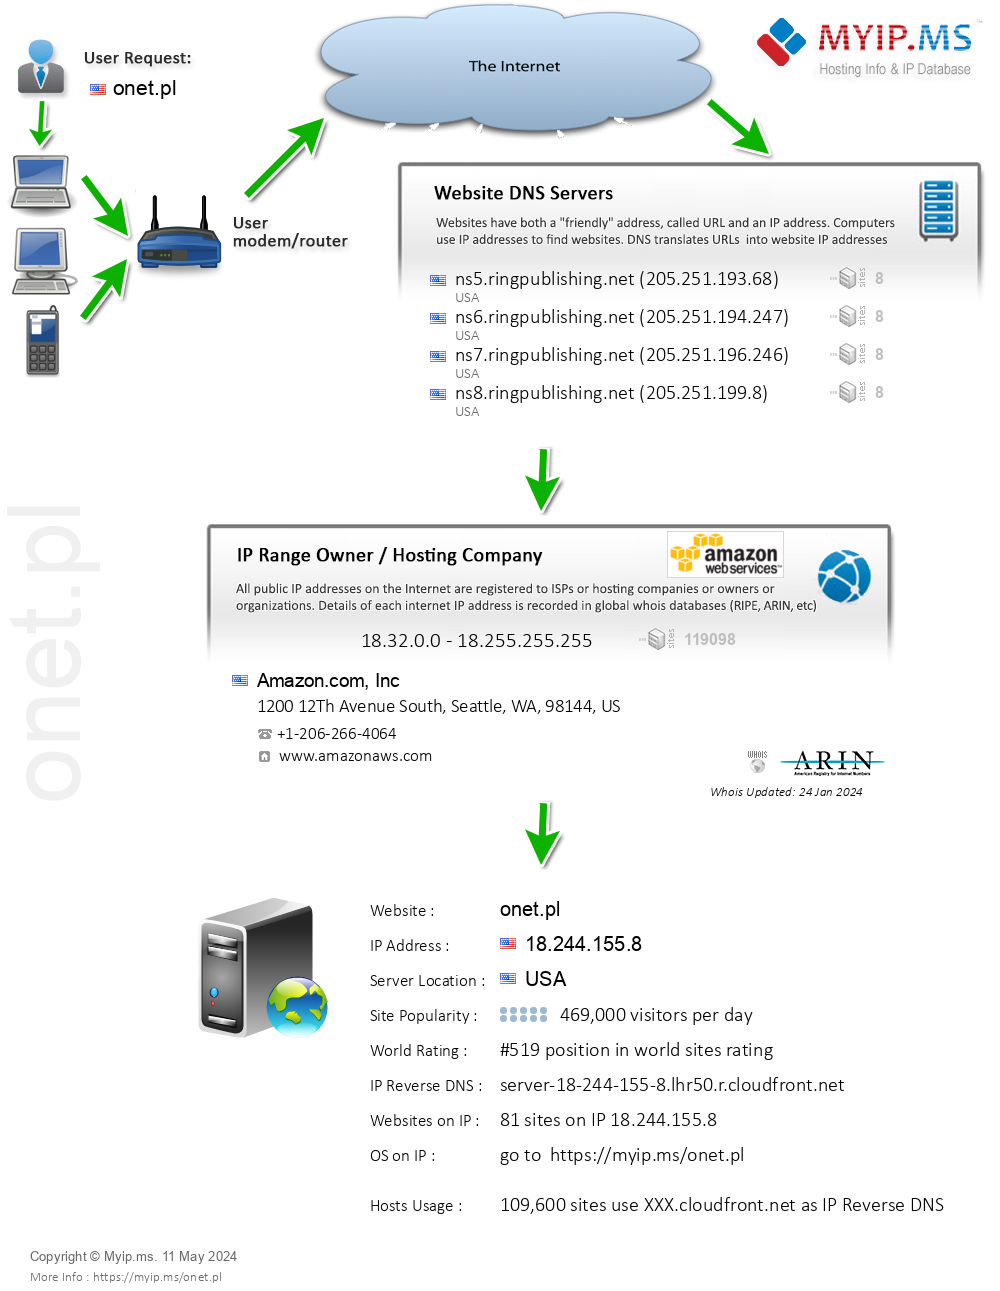 Onet.pl - Website Hosting Visual IP Diagram